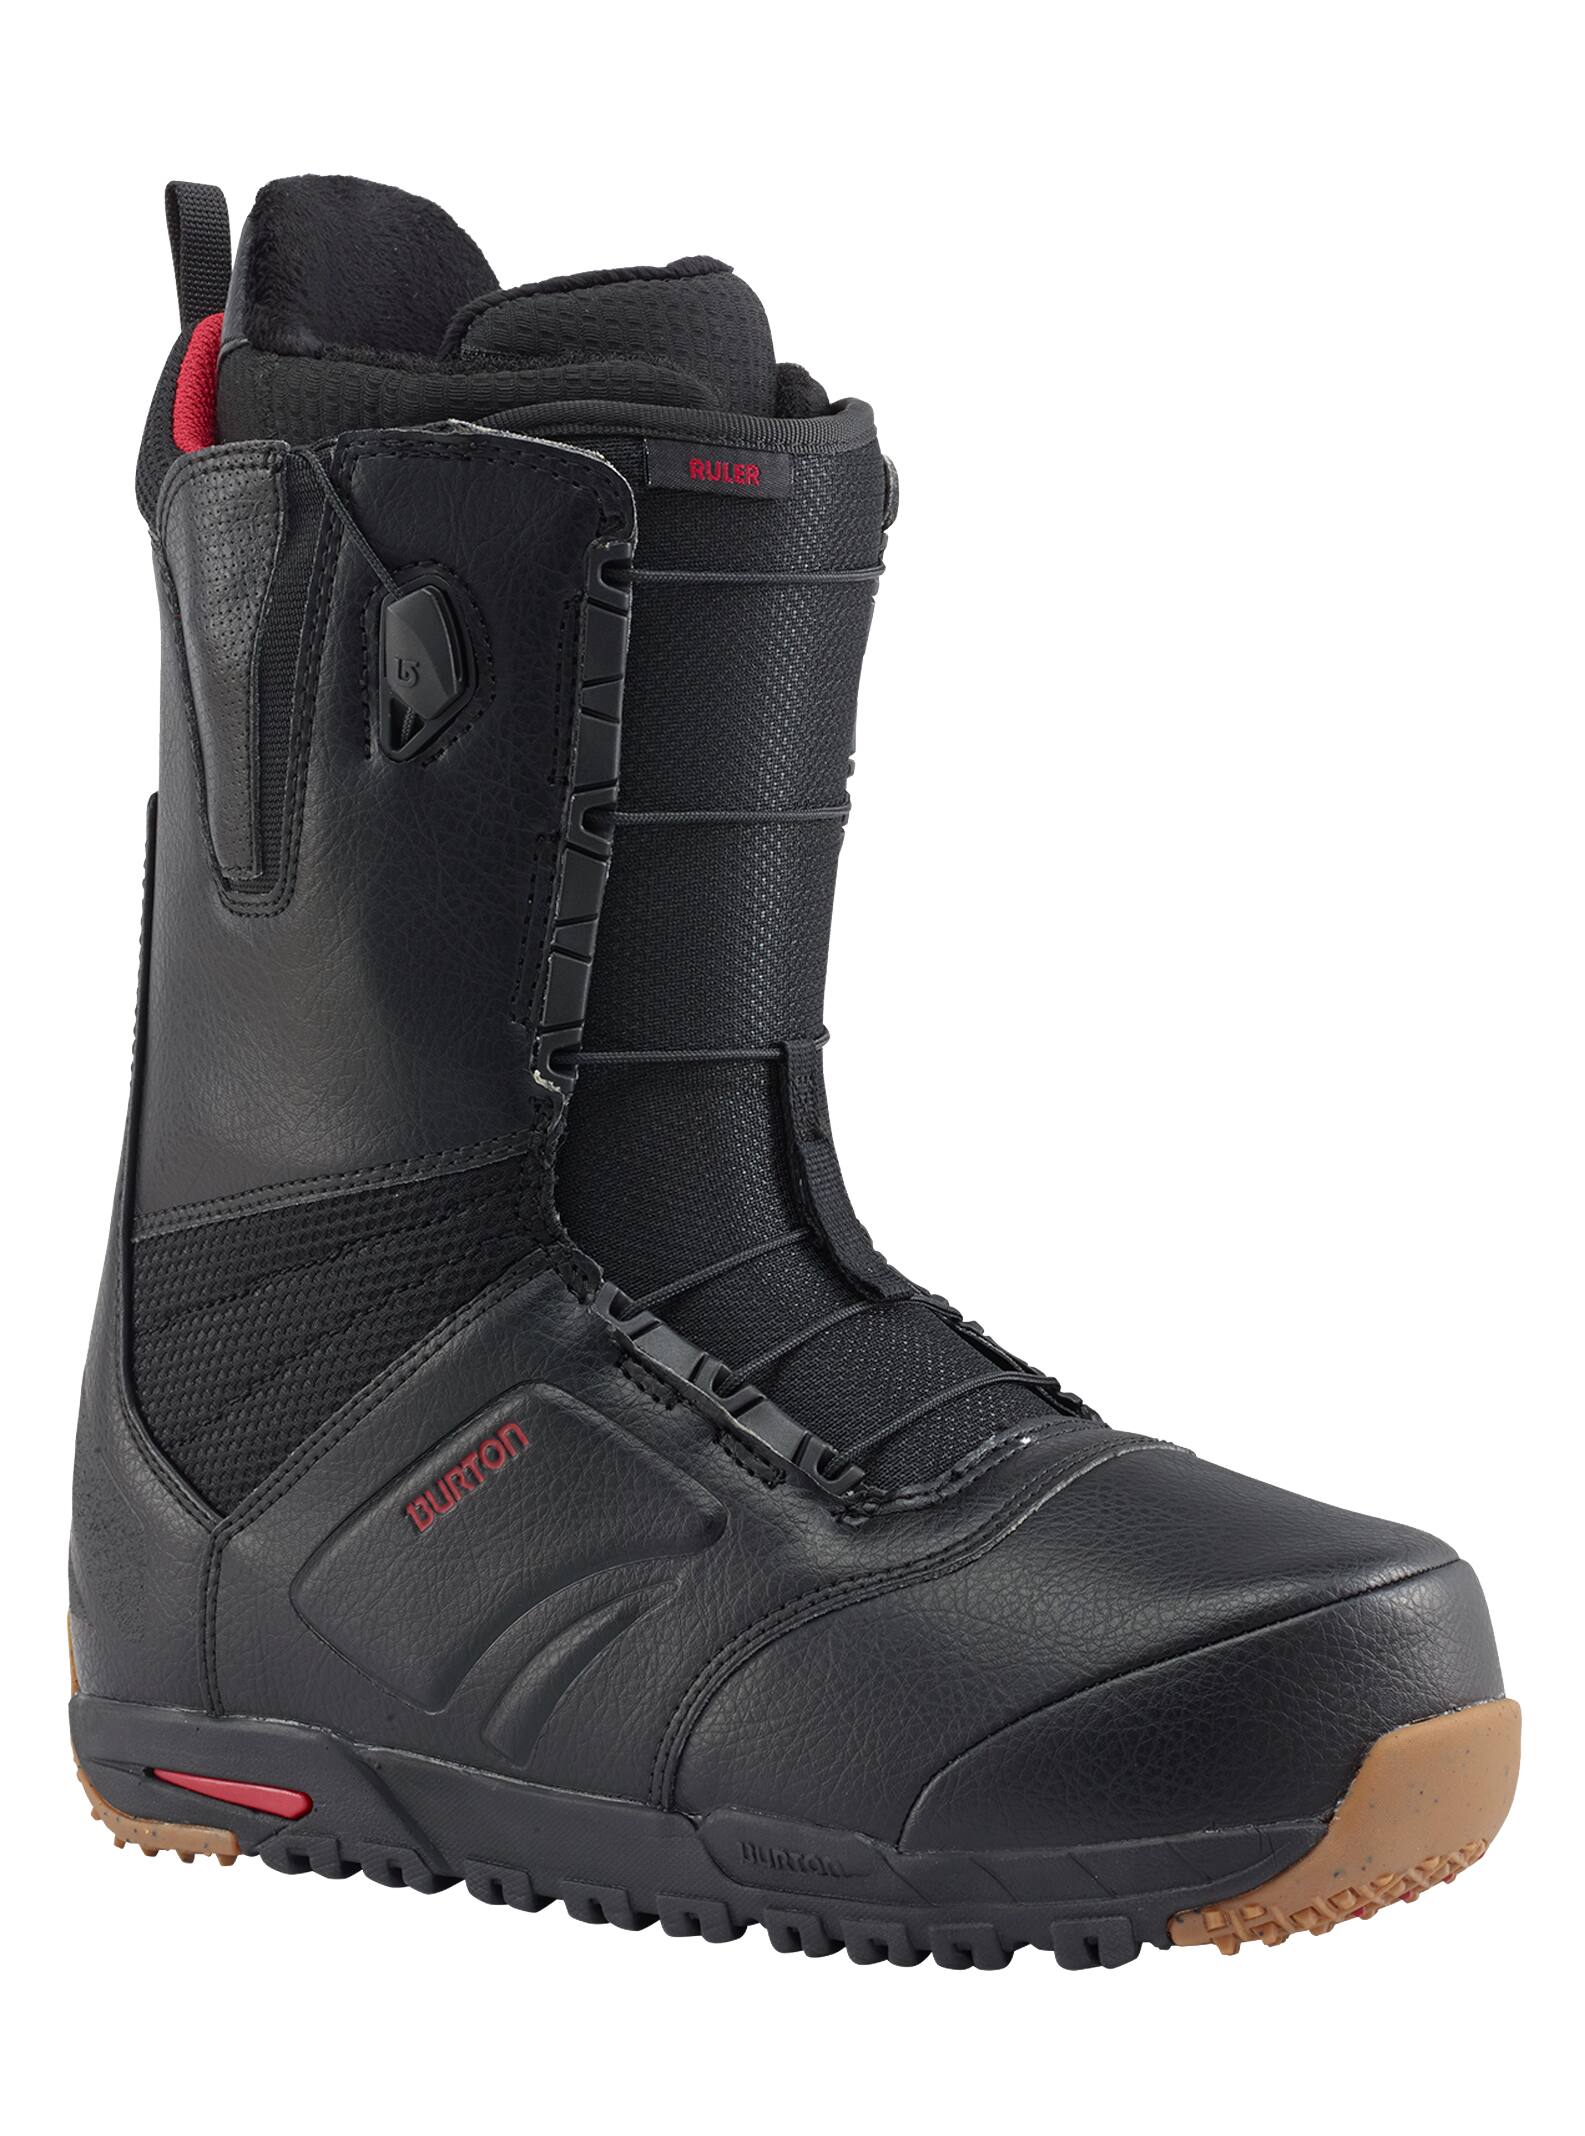 Burton - Boots de snowboard Ruler homme, Black, 10